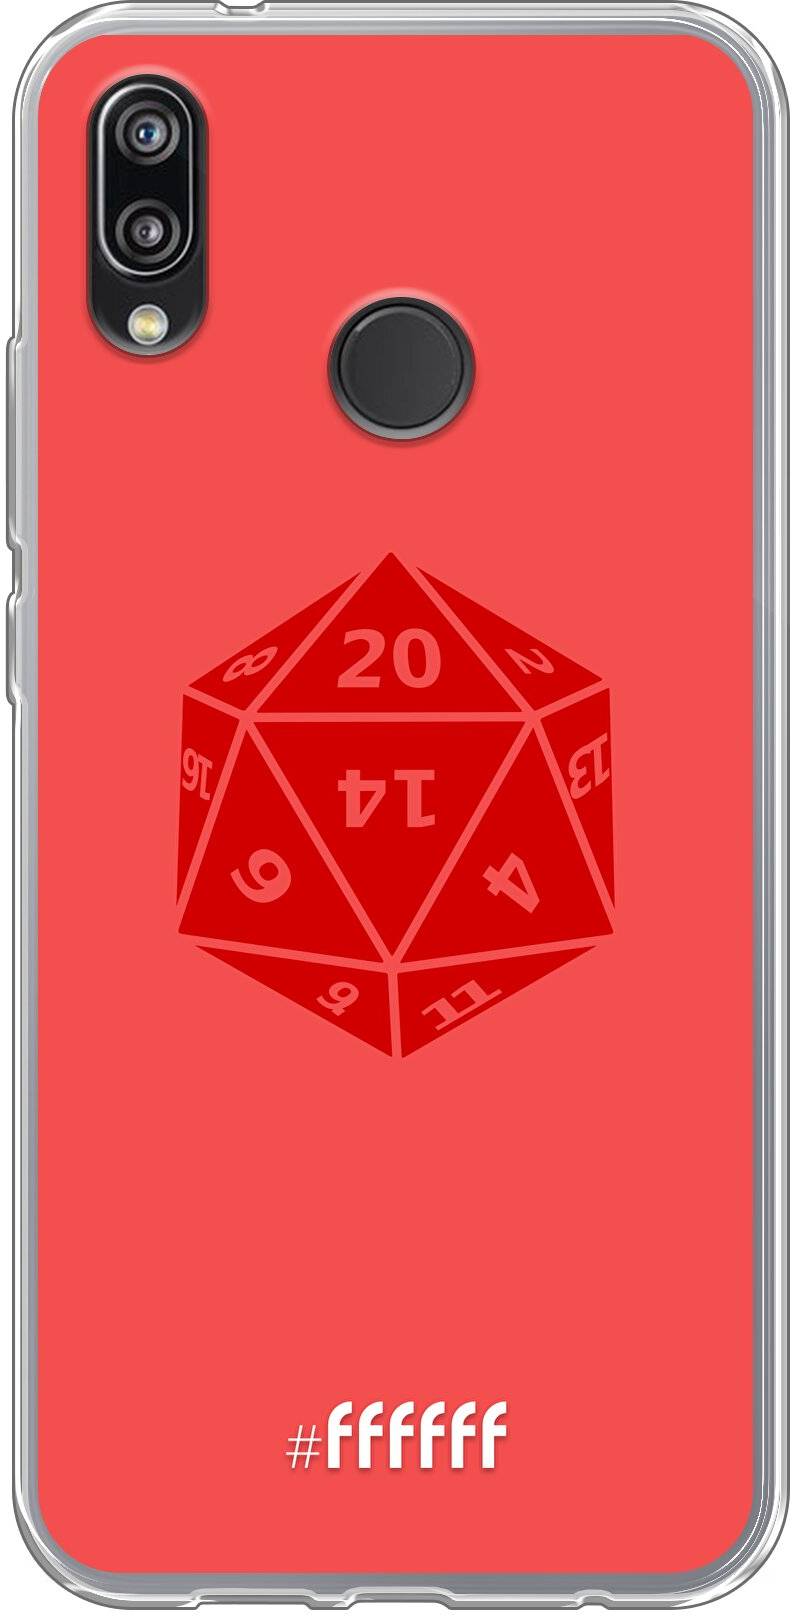 D20 - Red P20 Lite (2018)